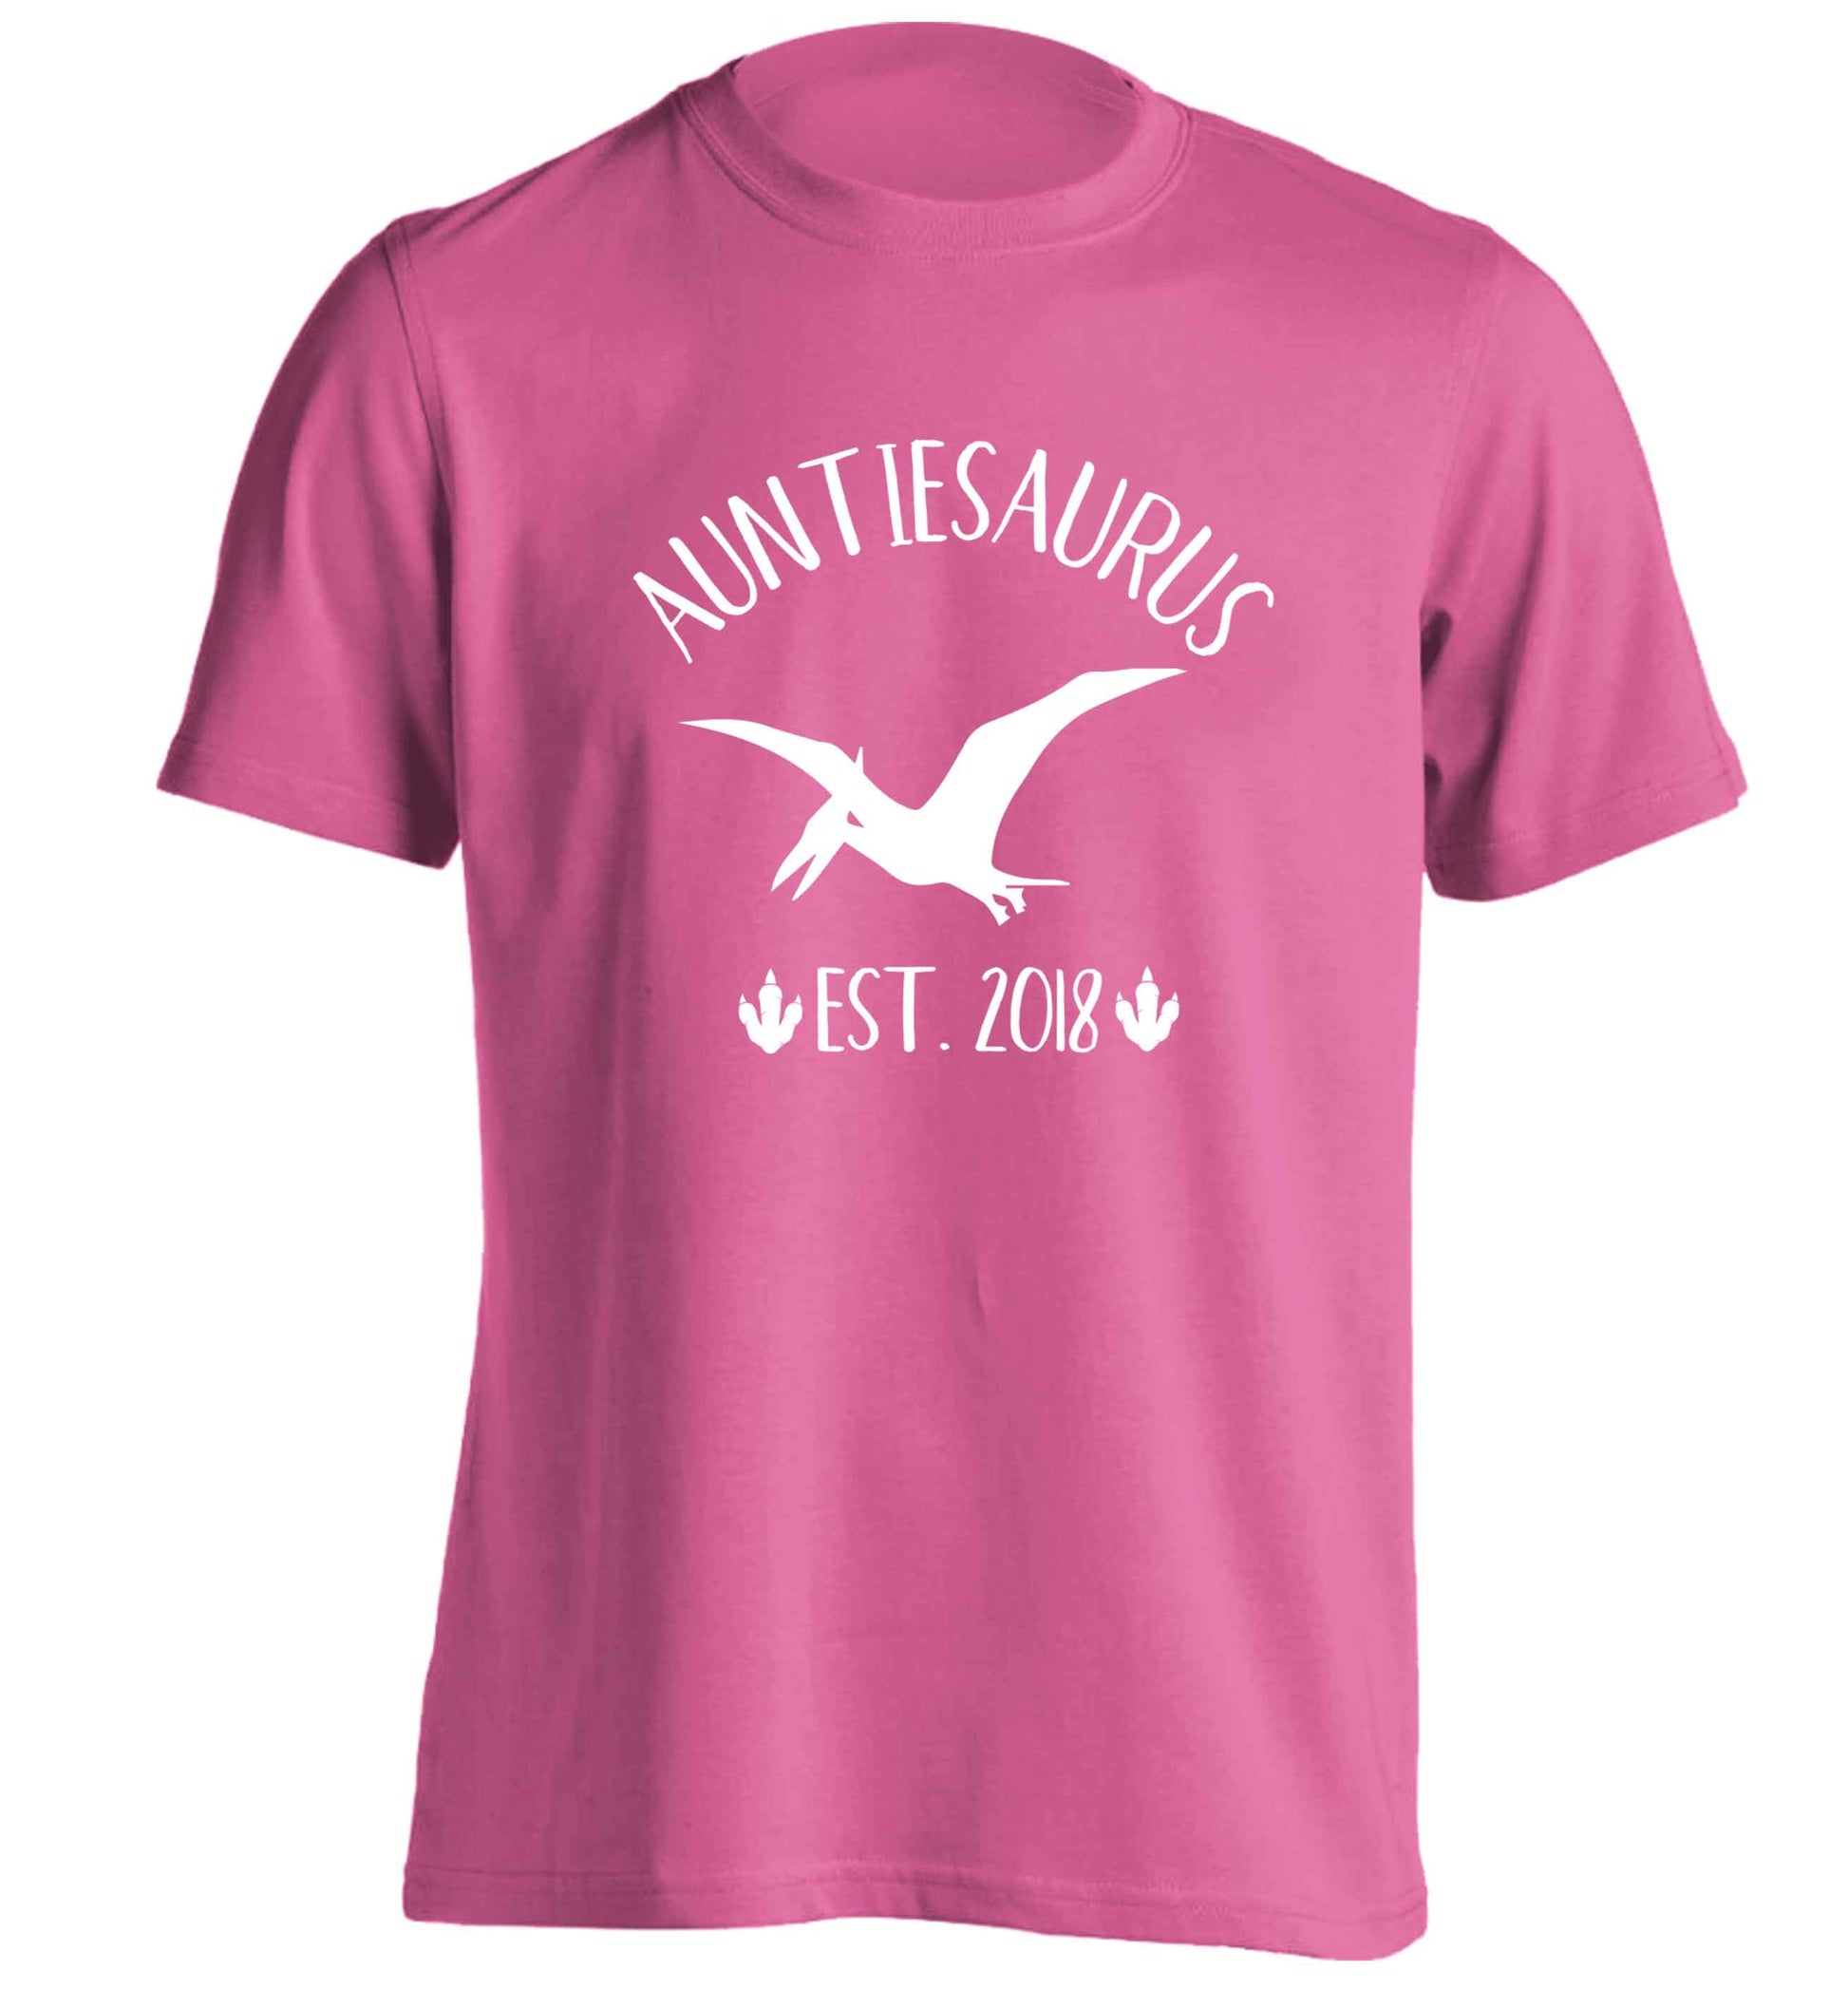 Personalised auntiesaurus since (custom date) adults unisex pink Tshirt 2XL